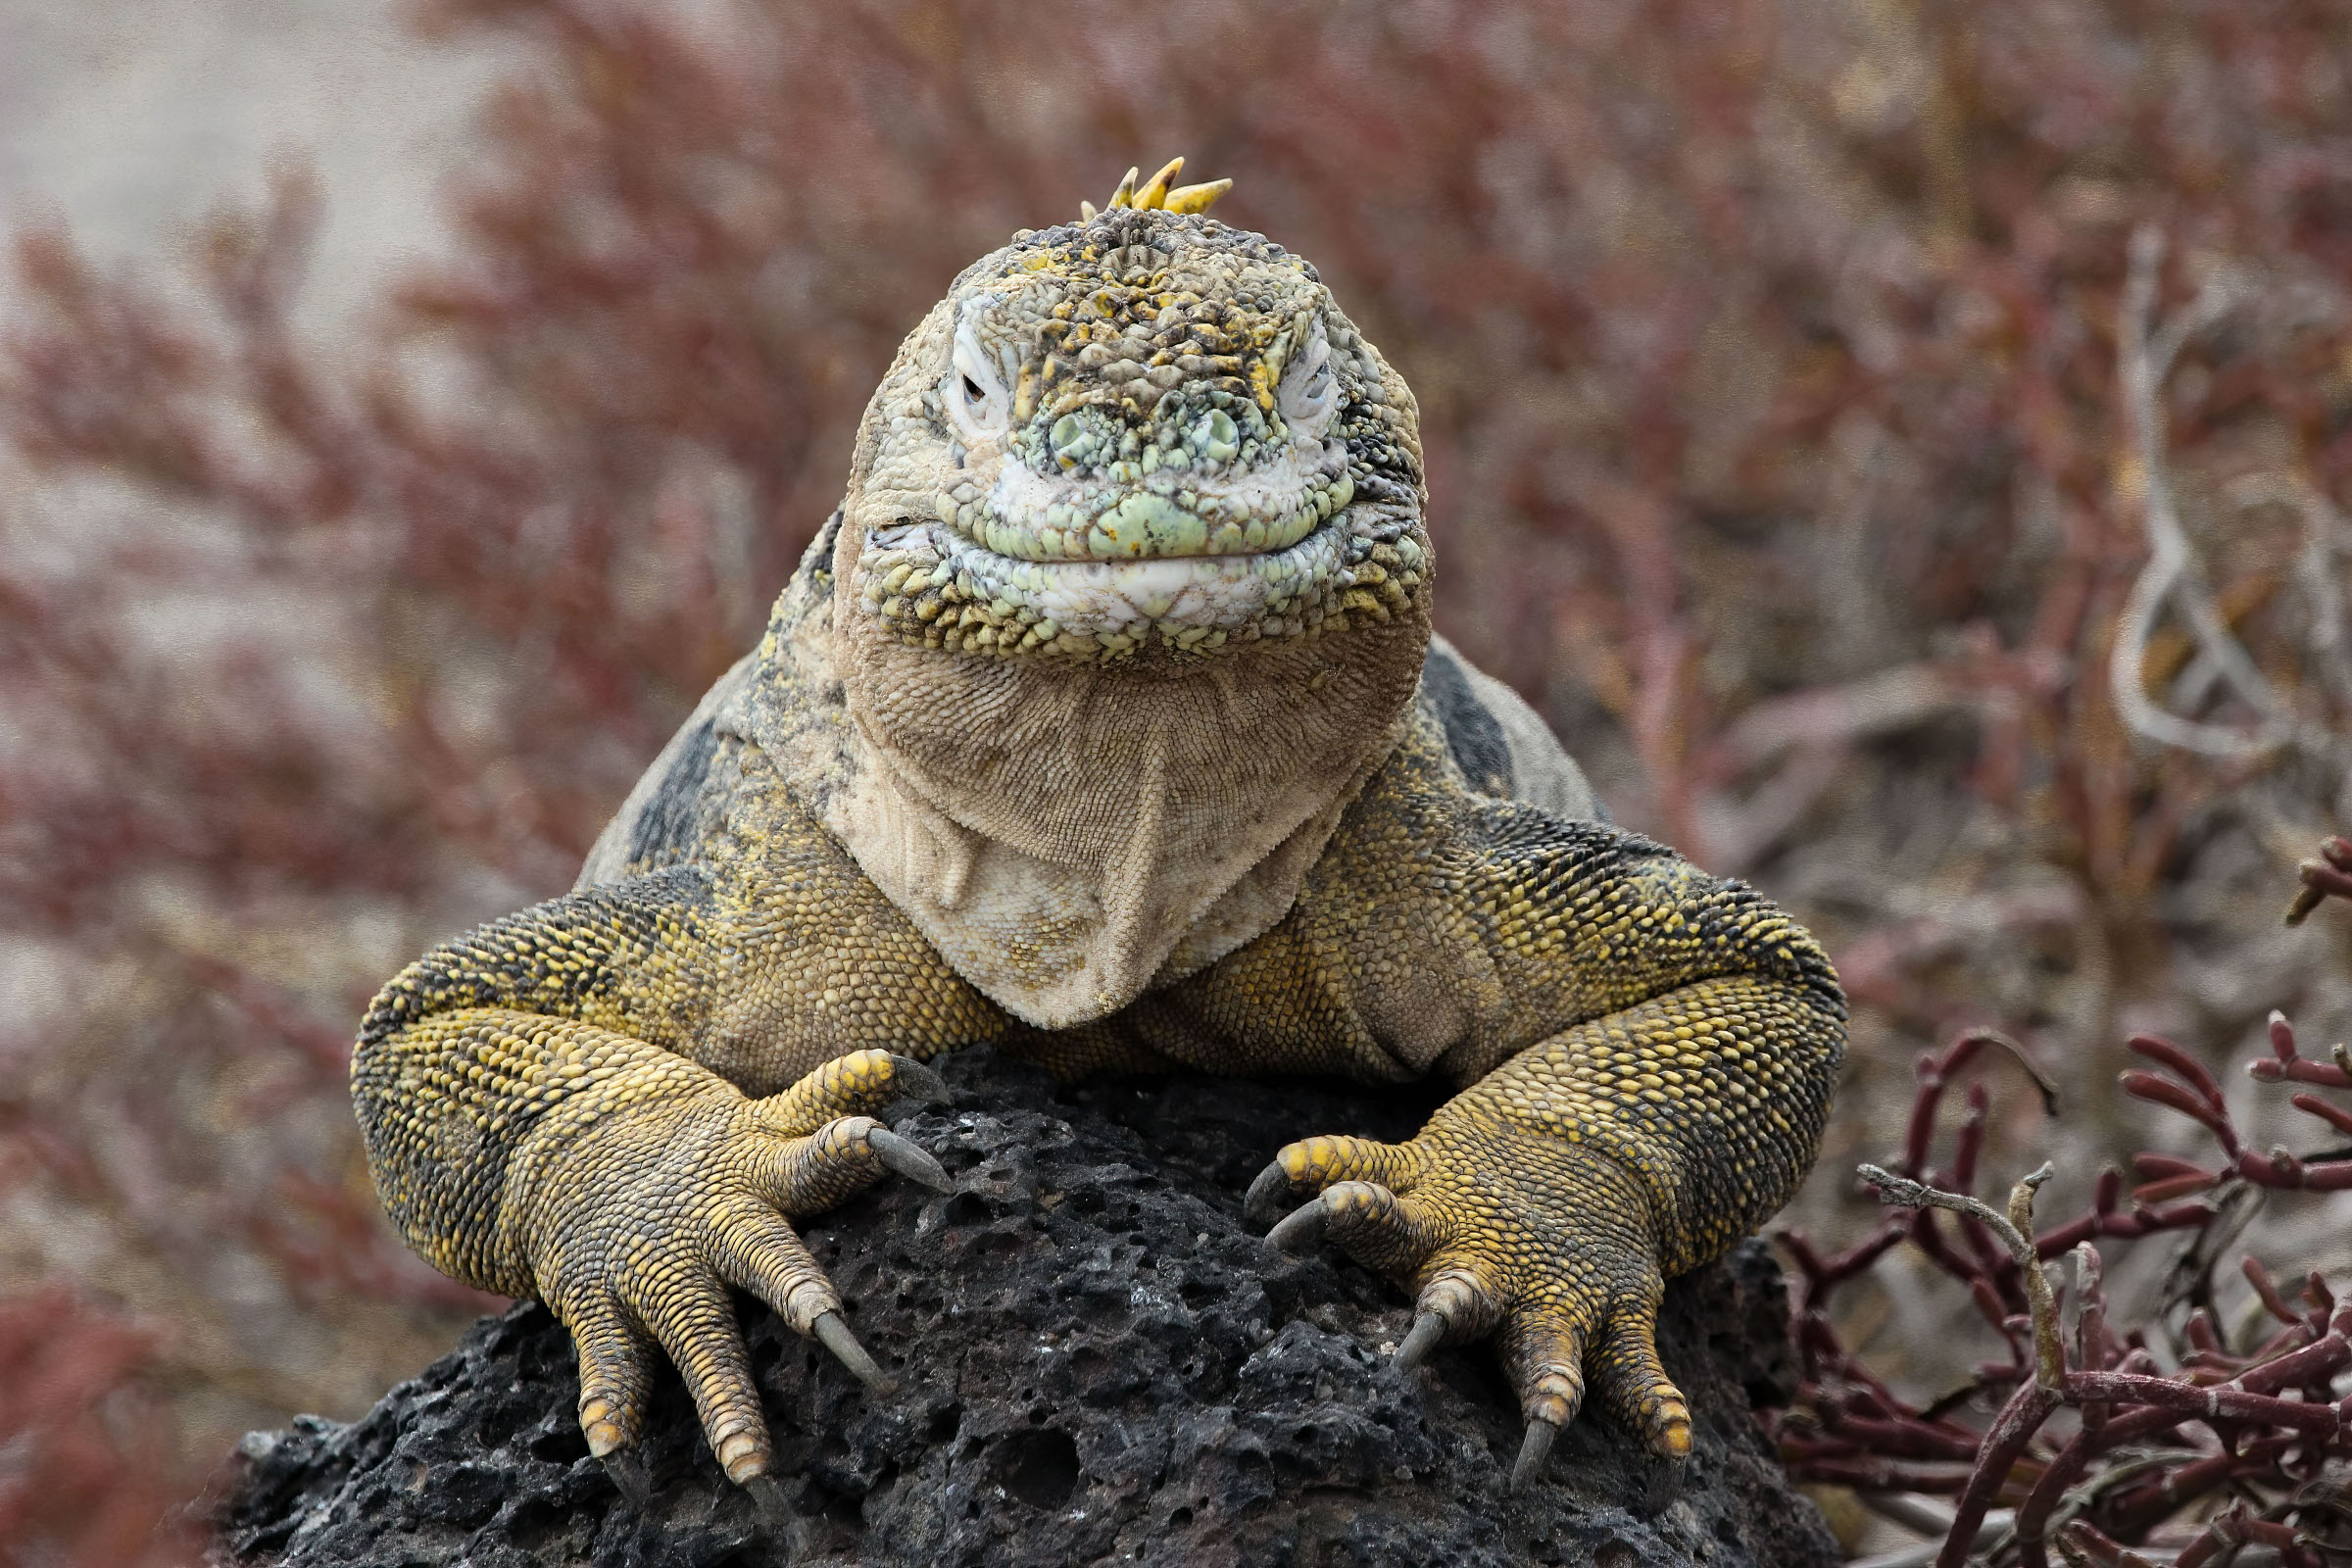 Smiling Iguana (Galapagos) by TJ Feeley